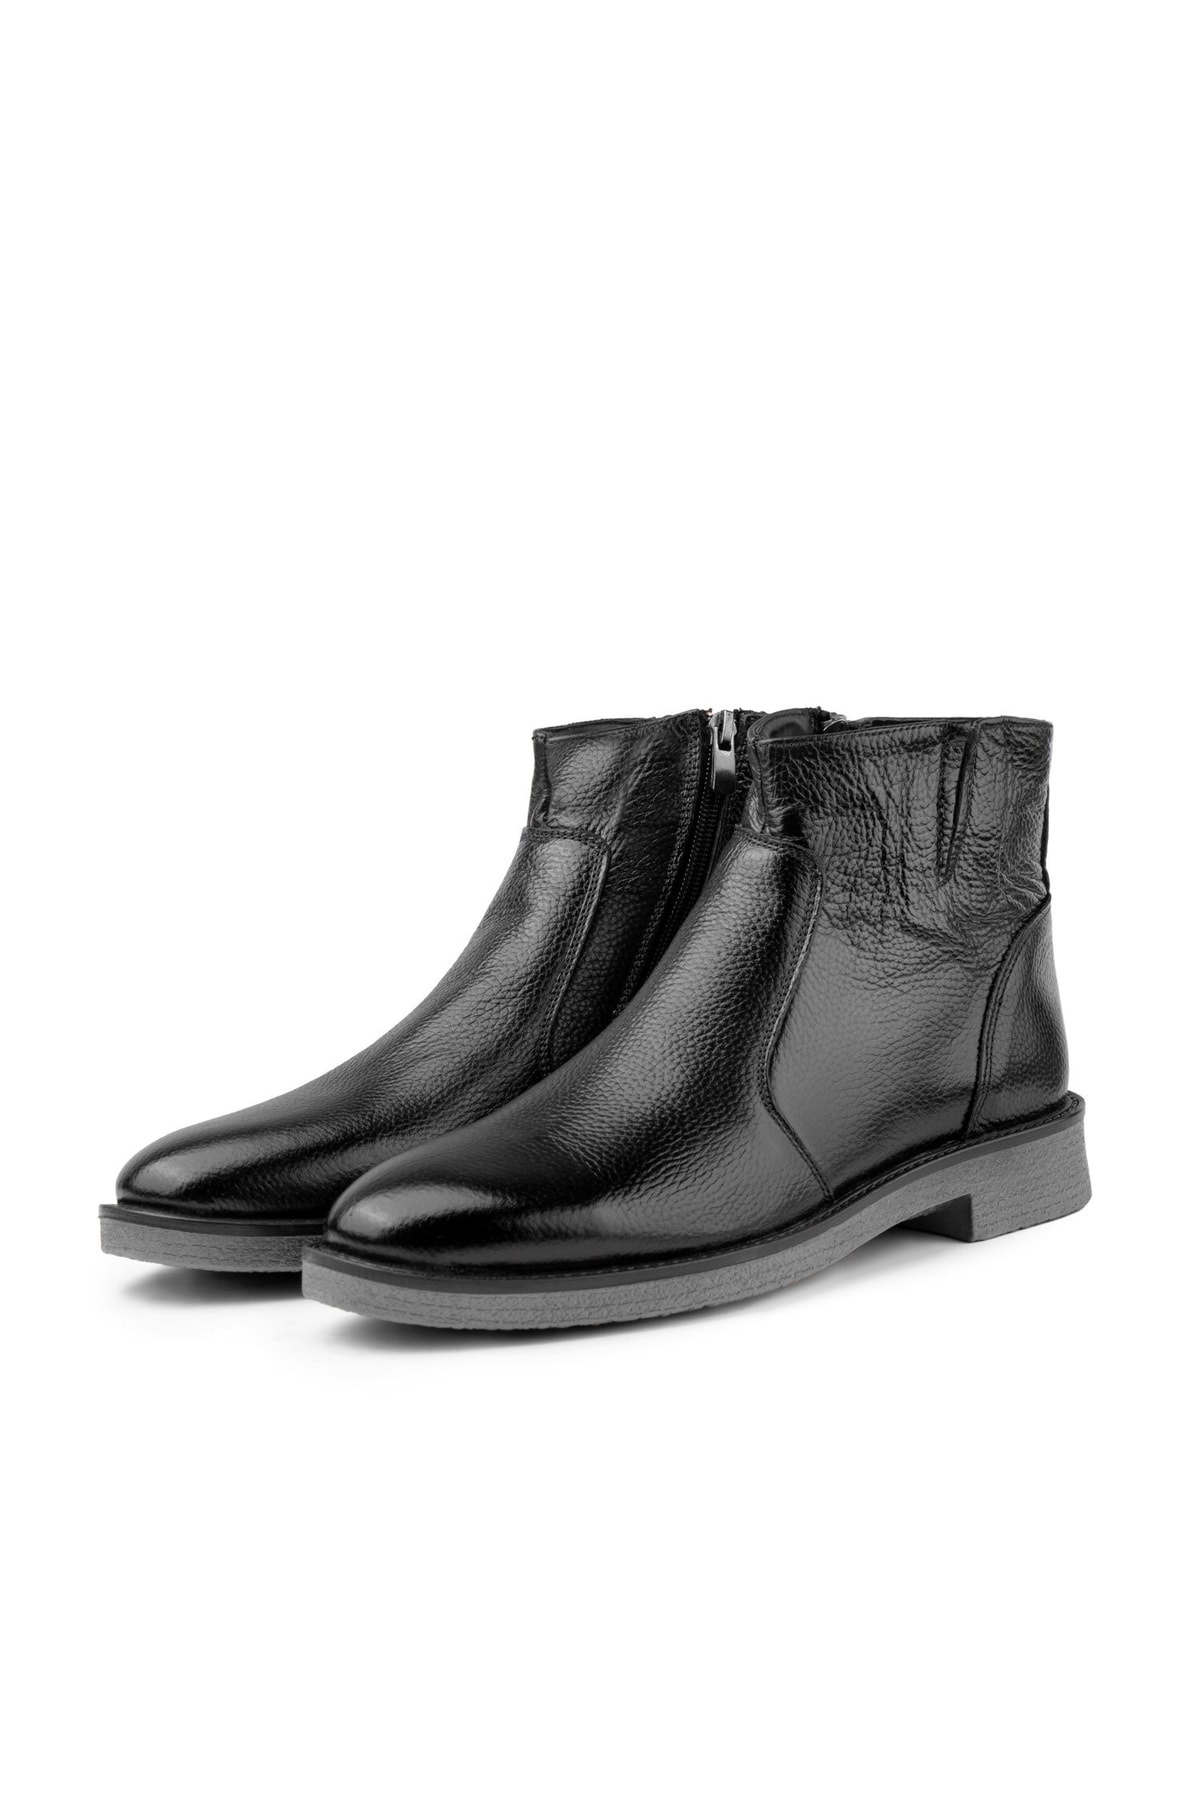 Levně Ducavelli Bristol Genuine Leather Non-slip Sole With Zipper Chelsea Daily Boots Black.